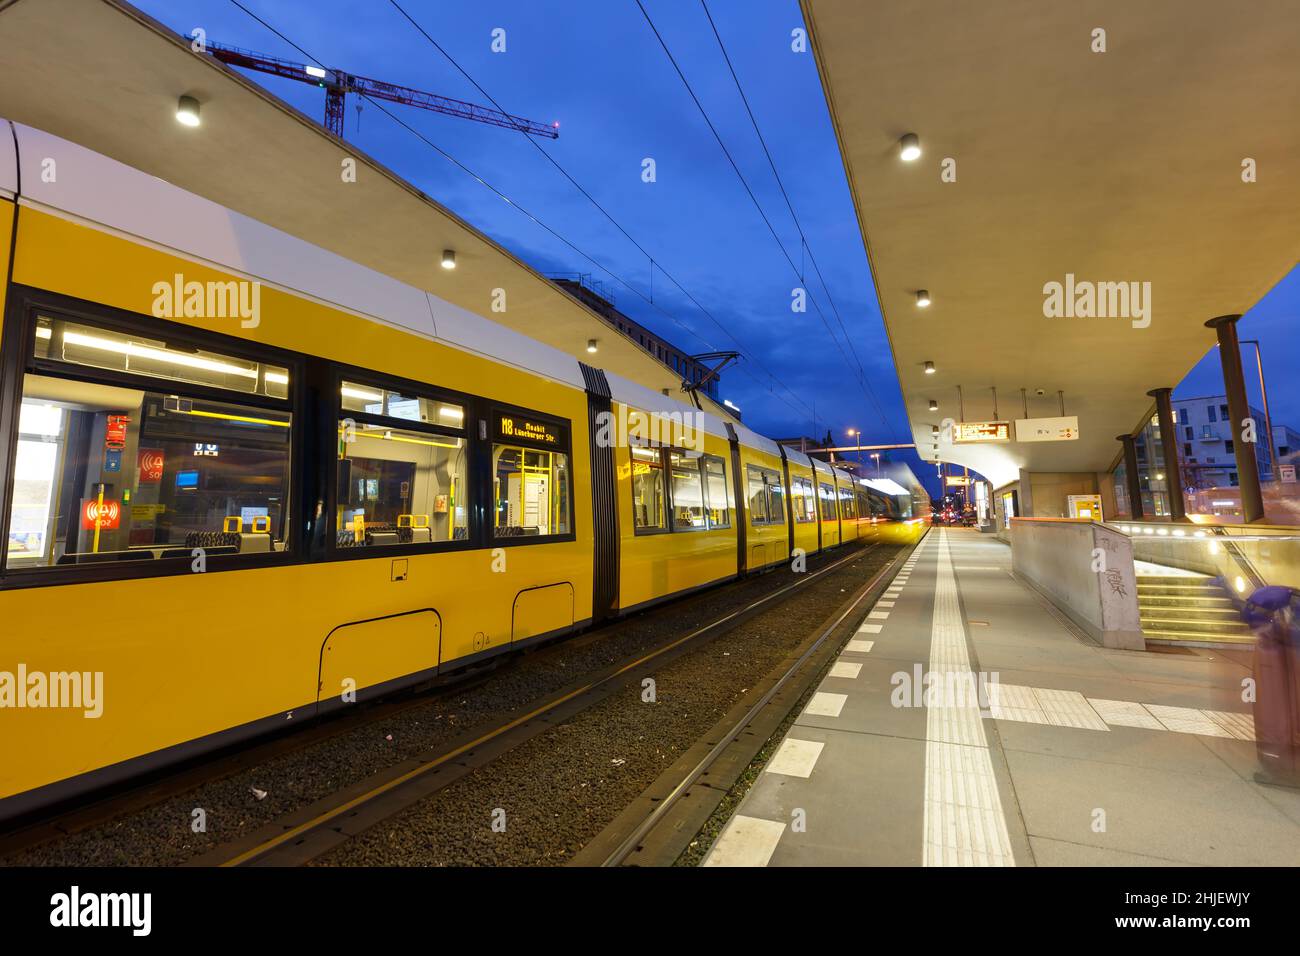 Berlin, Allemagne - 22 avril 2021 : tramway Bombardier FLEXITY transport en commun Hauptbahnhof gare principale de Berlin, Allemagne. Banque D'Images